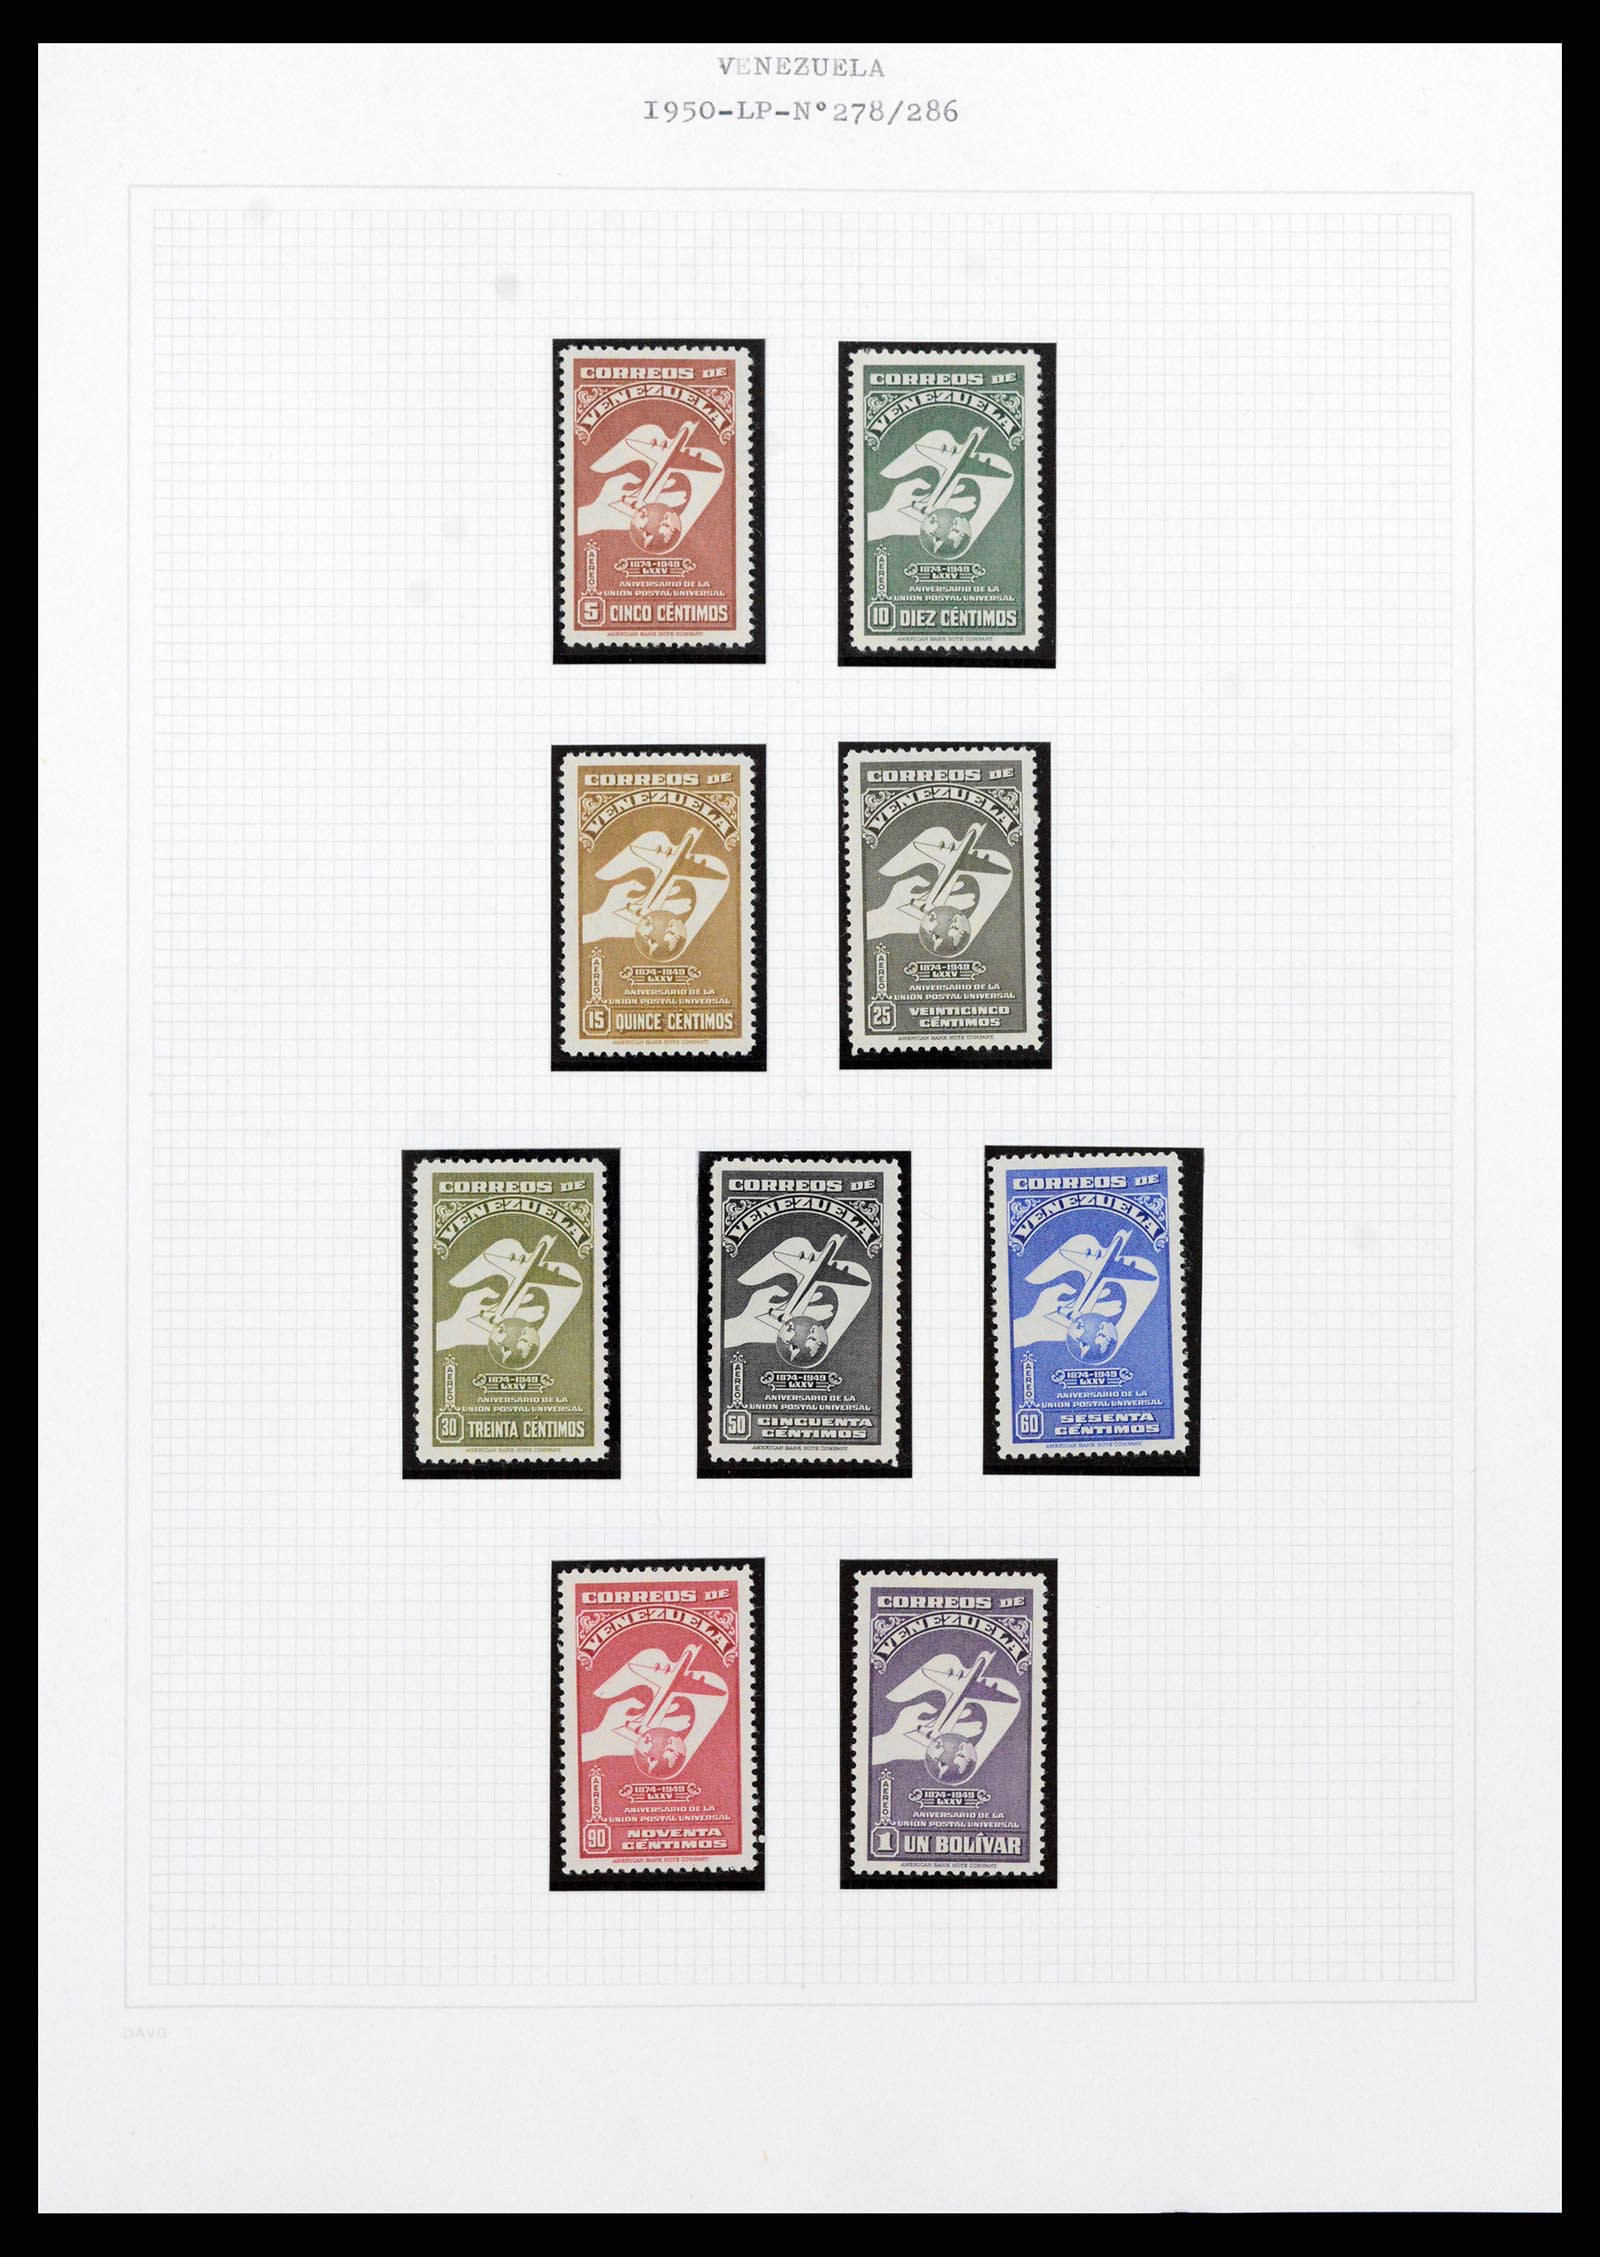 37353 072 - Stamp collection 37353 Venezuela 1880-1960.